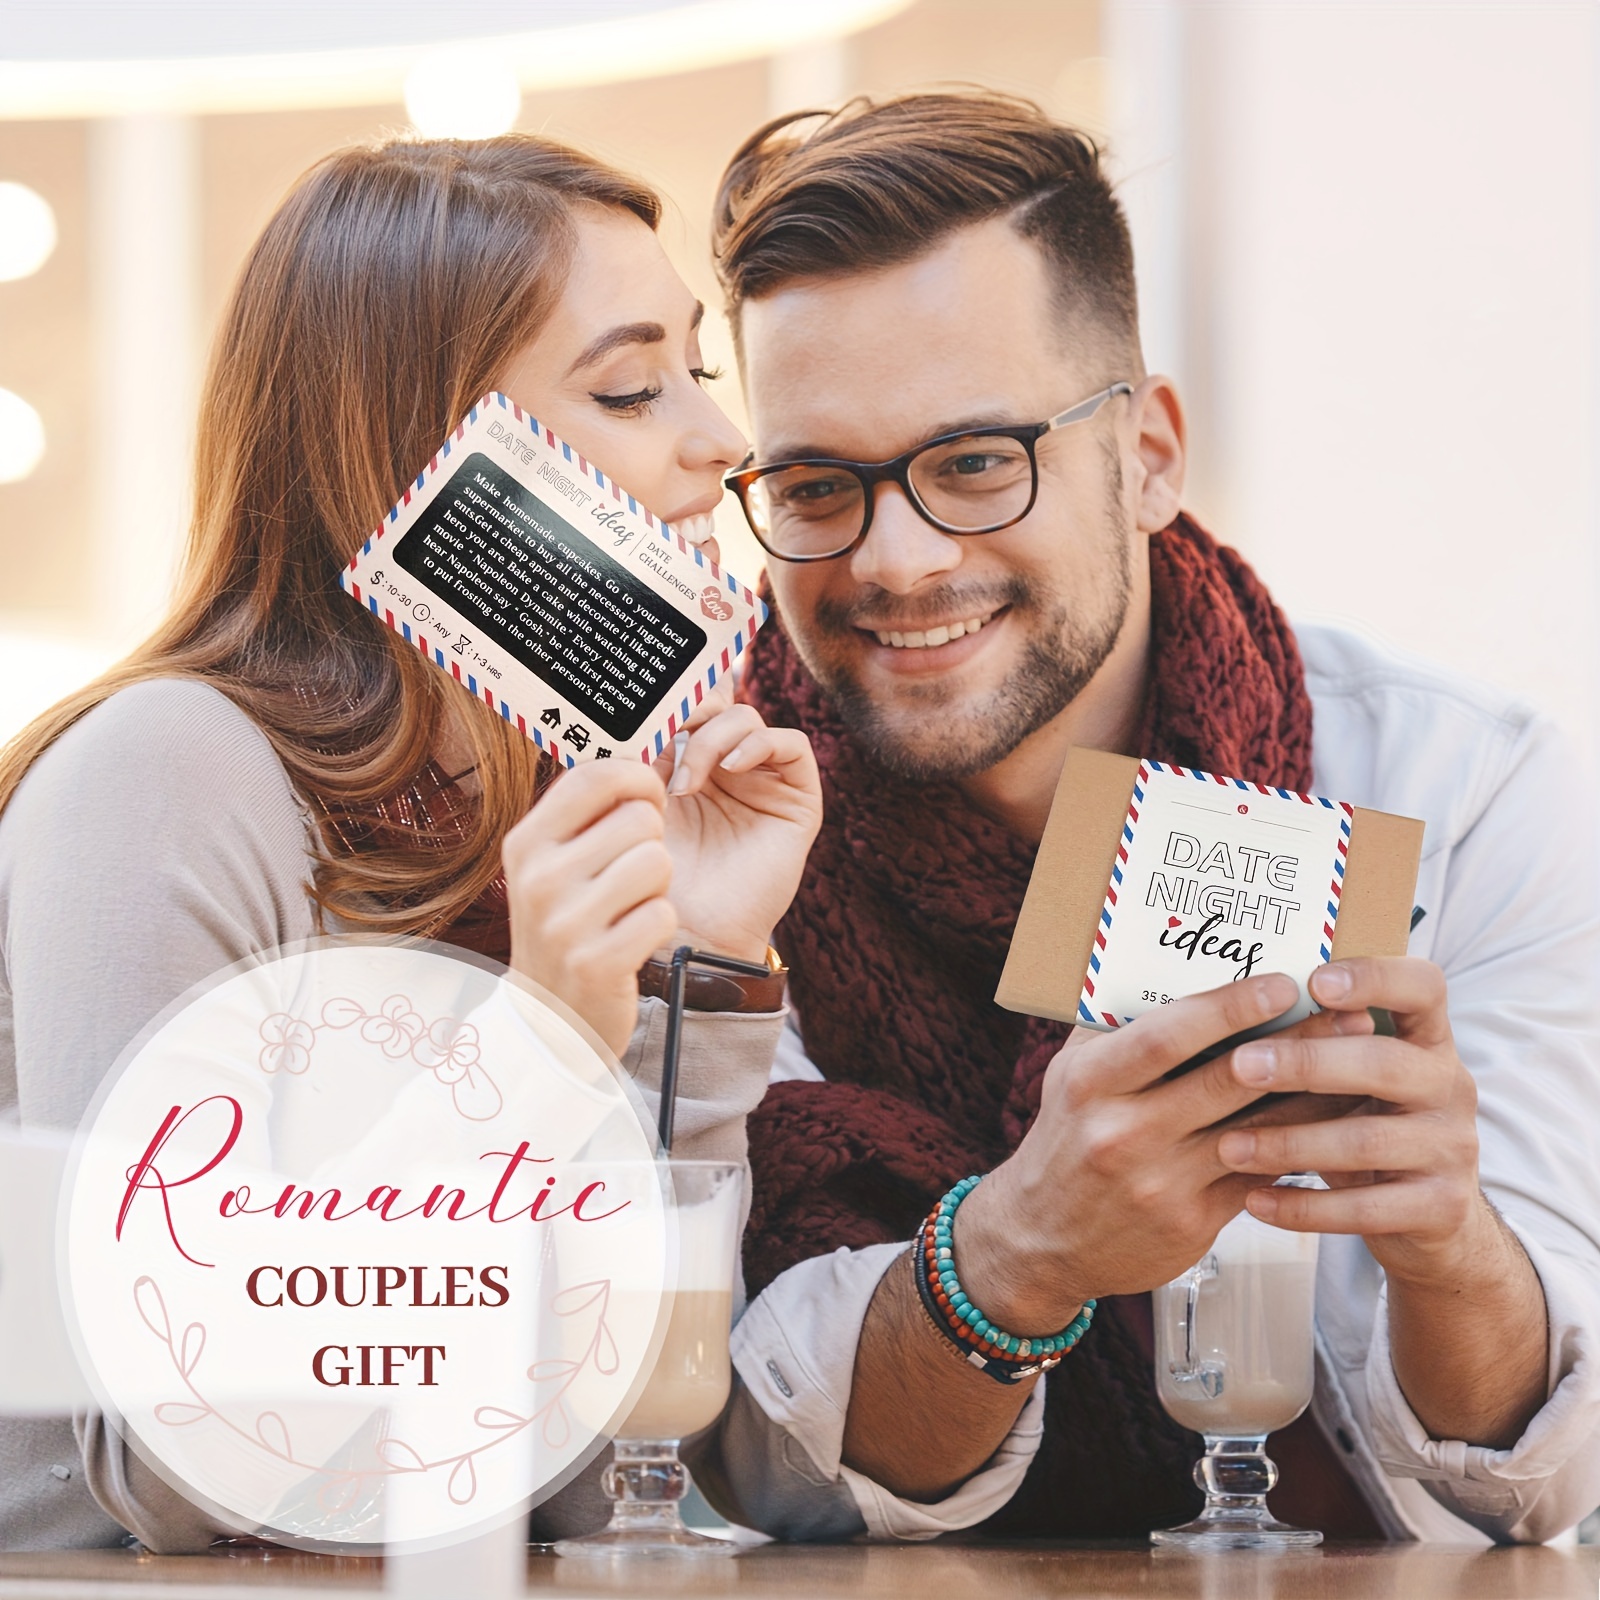 Romantic Couples Gift - Fun & Adventurous Date Night Box - Scratch Off